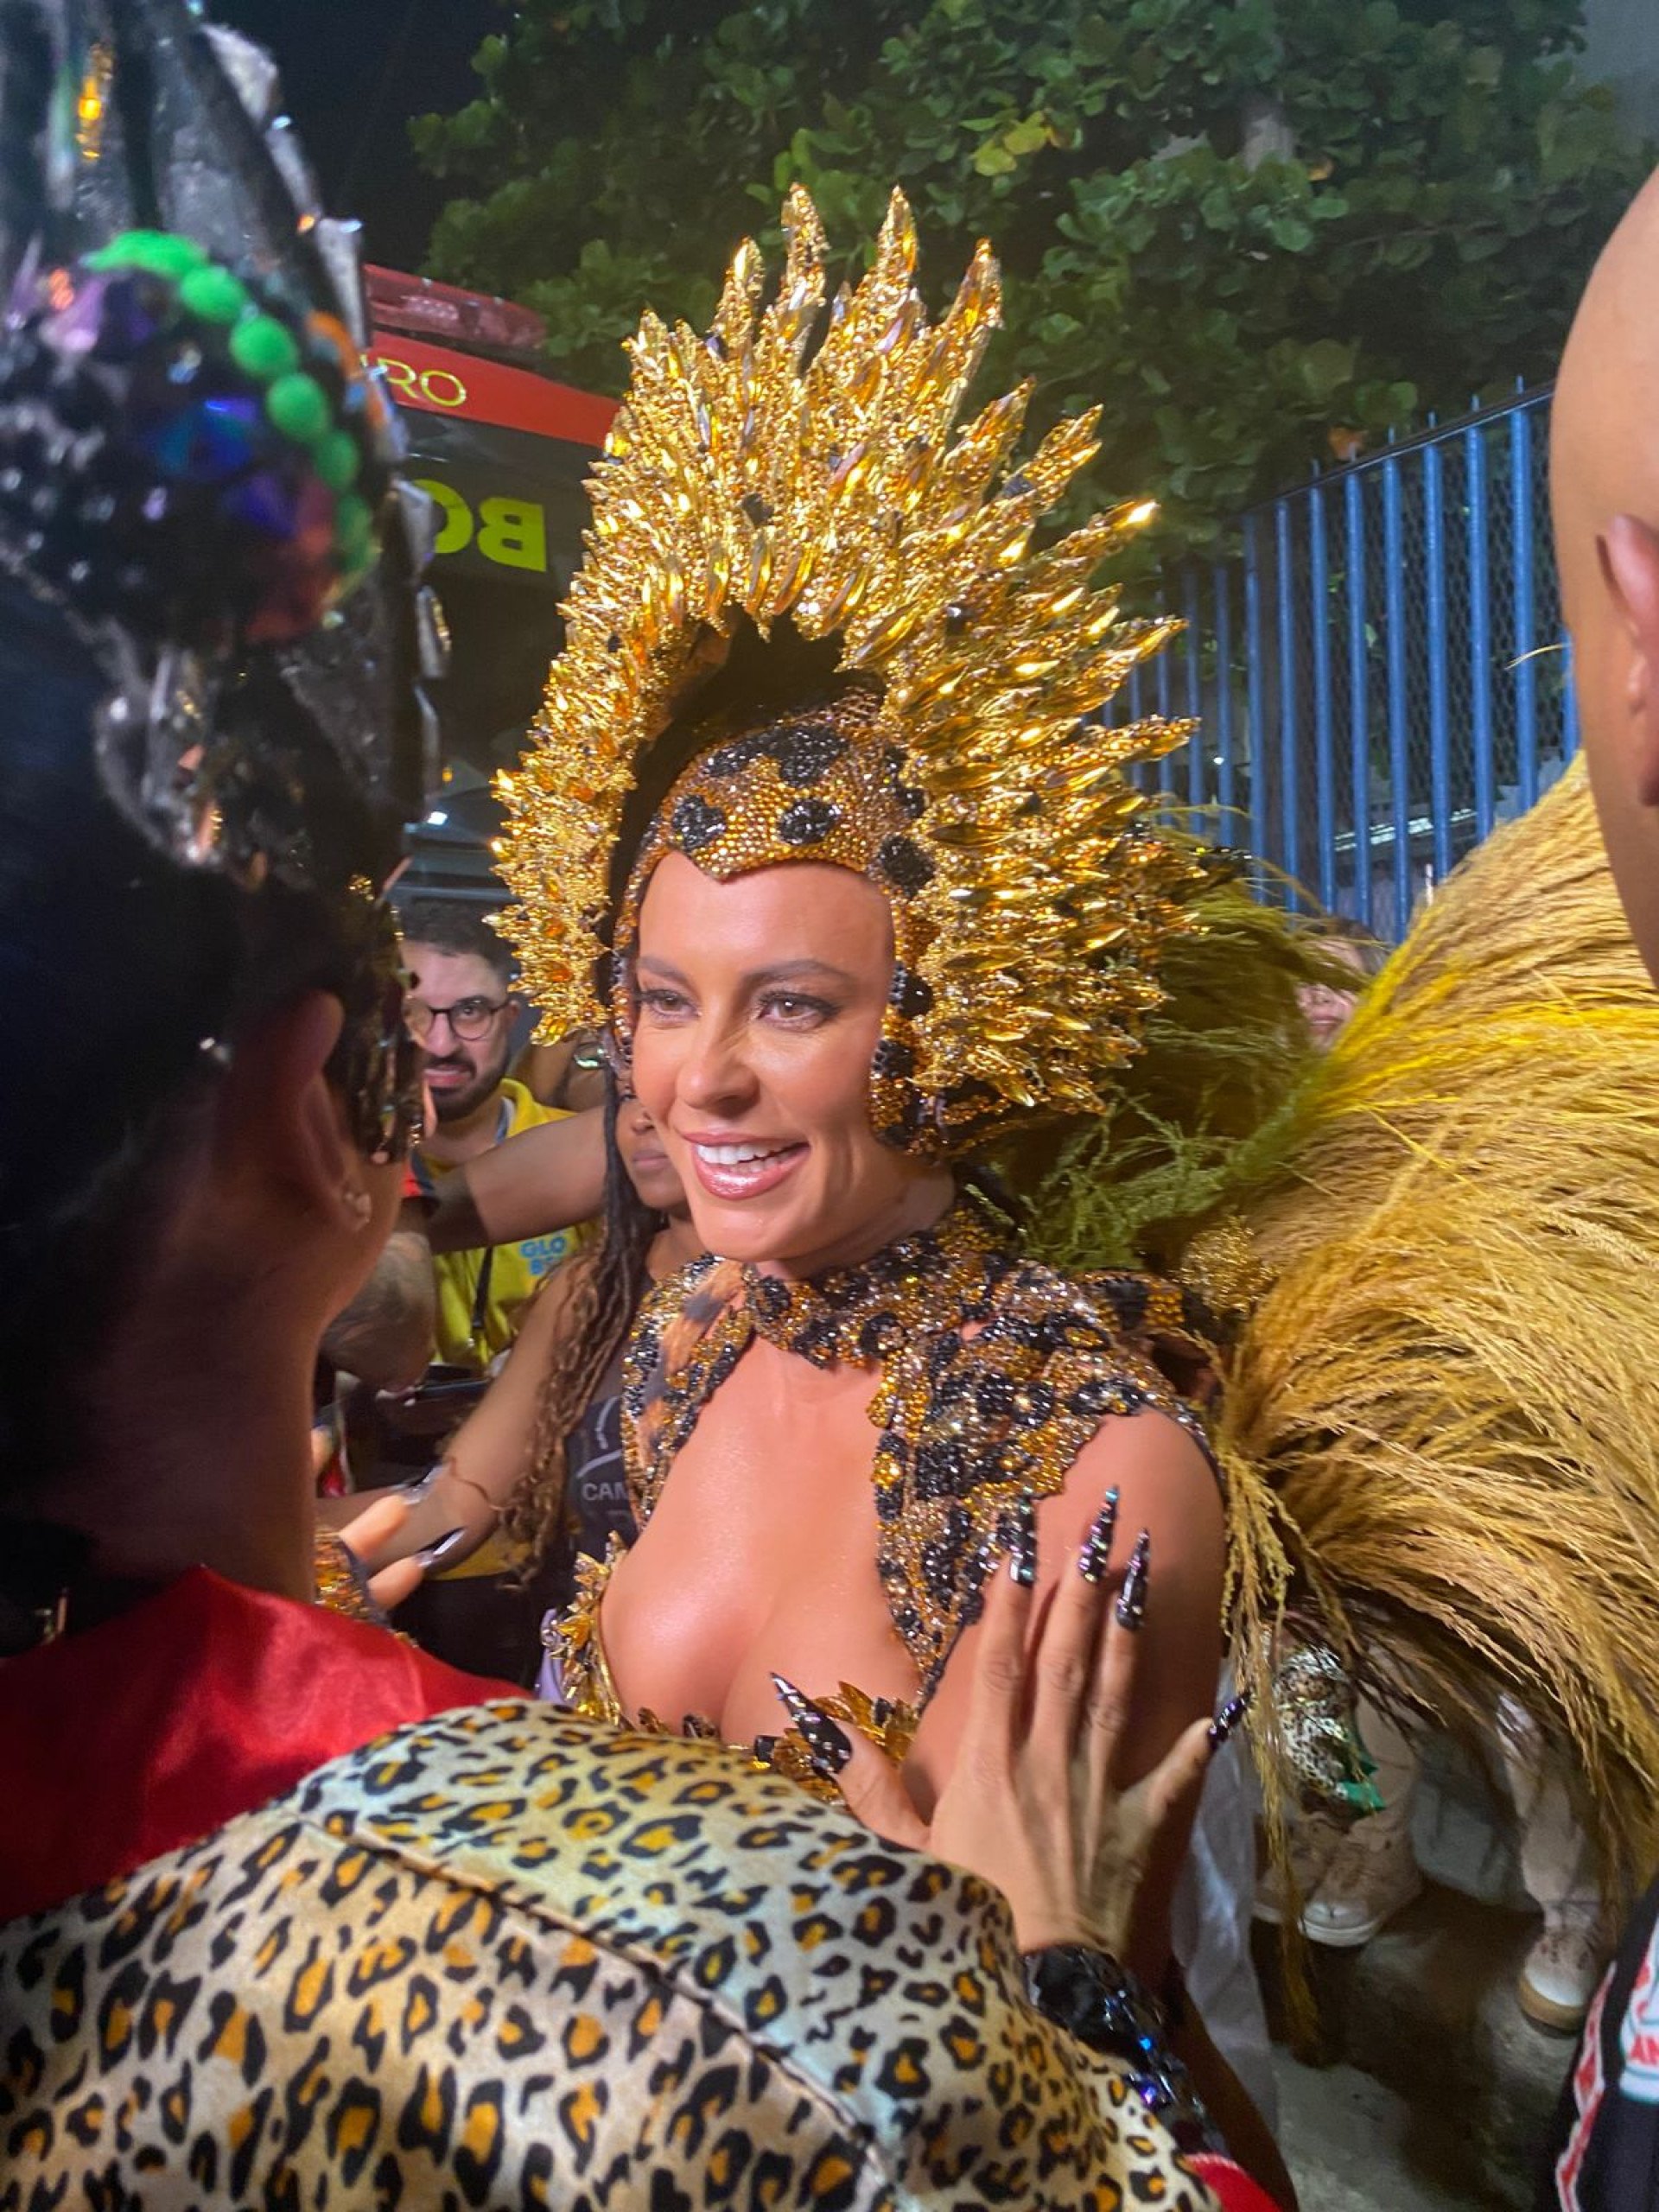 Paolla Oliveira represents the jaguar during the Grande Rio parade